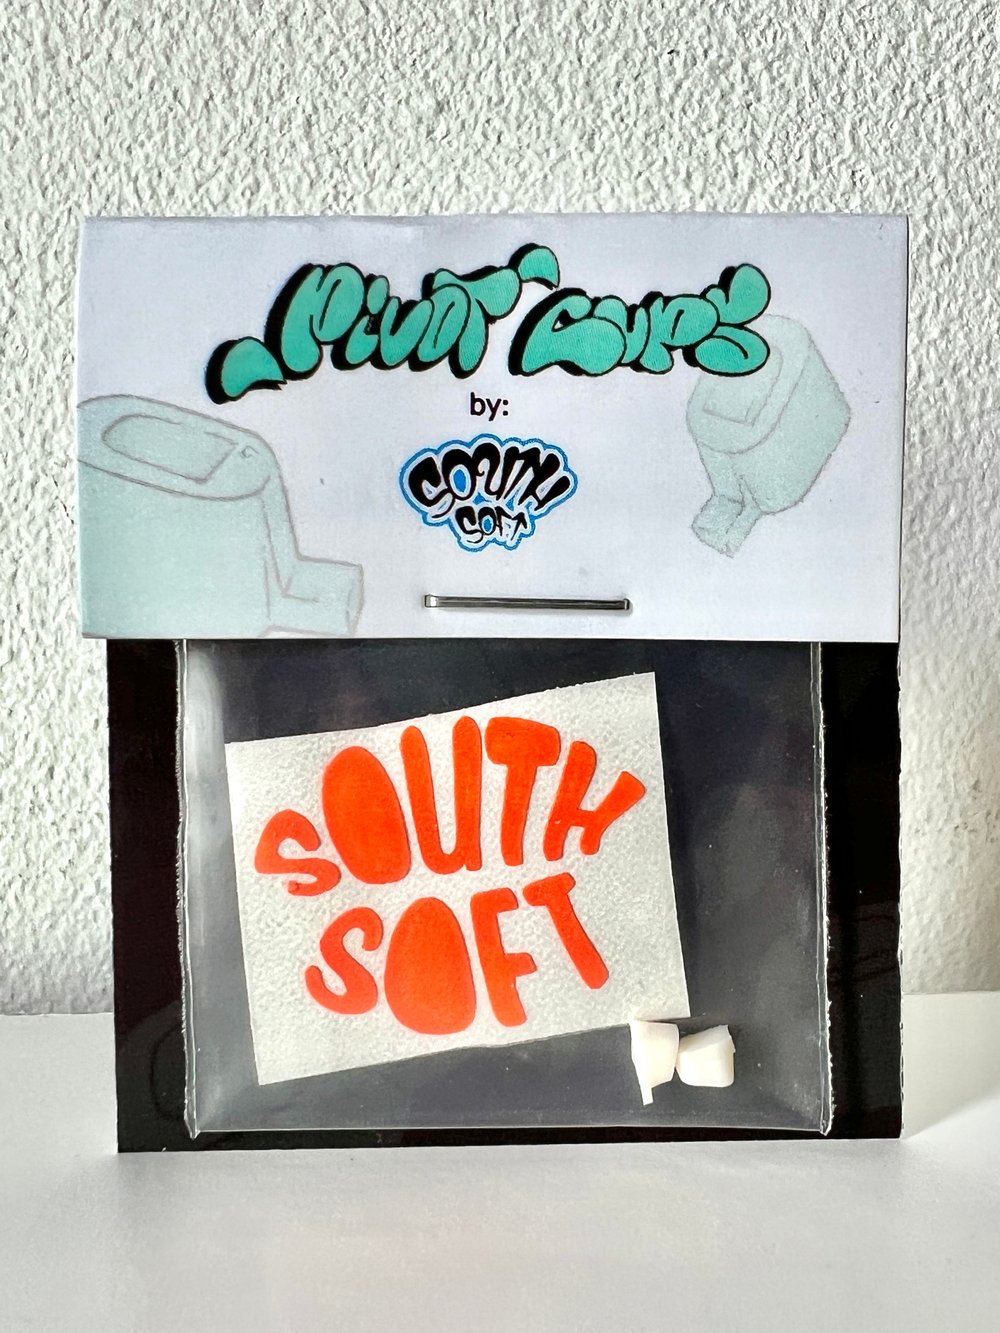 PIVOT CUPS by Southsoft - SOFT